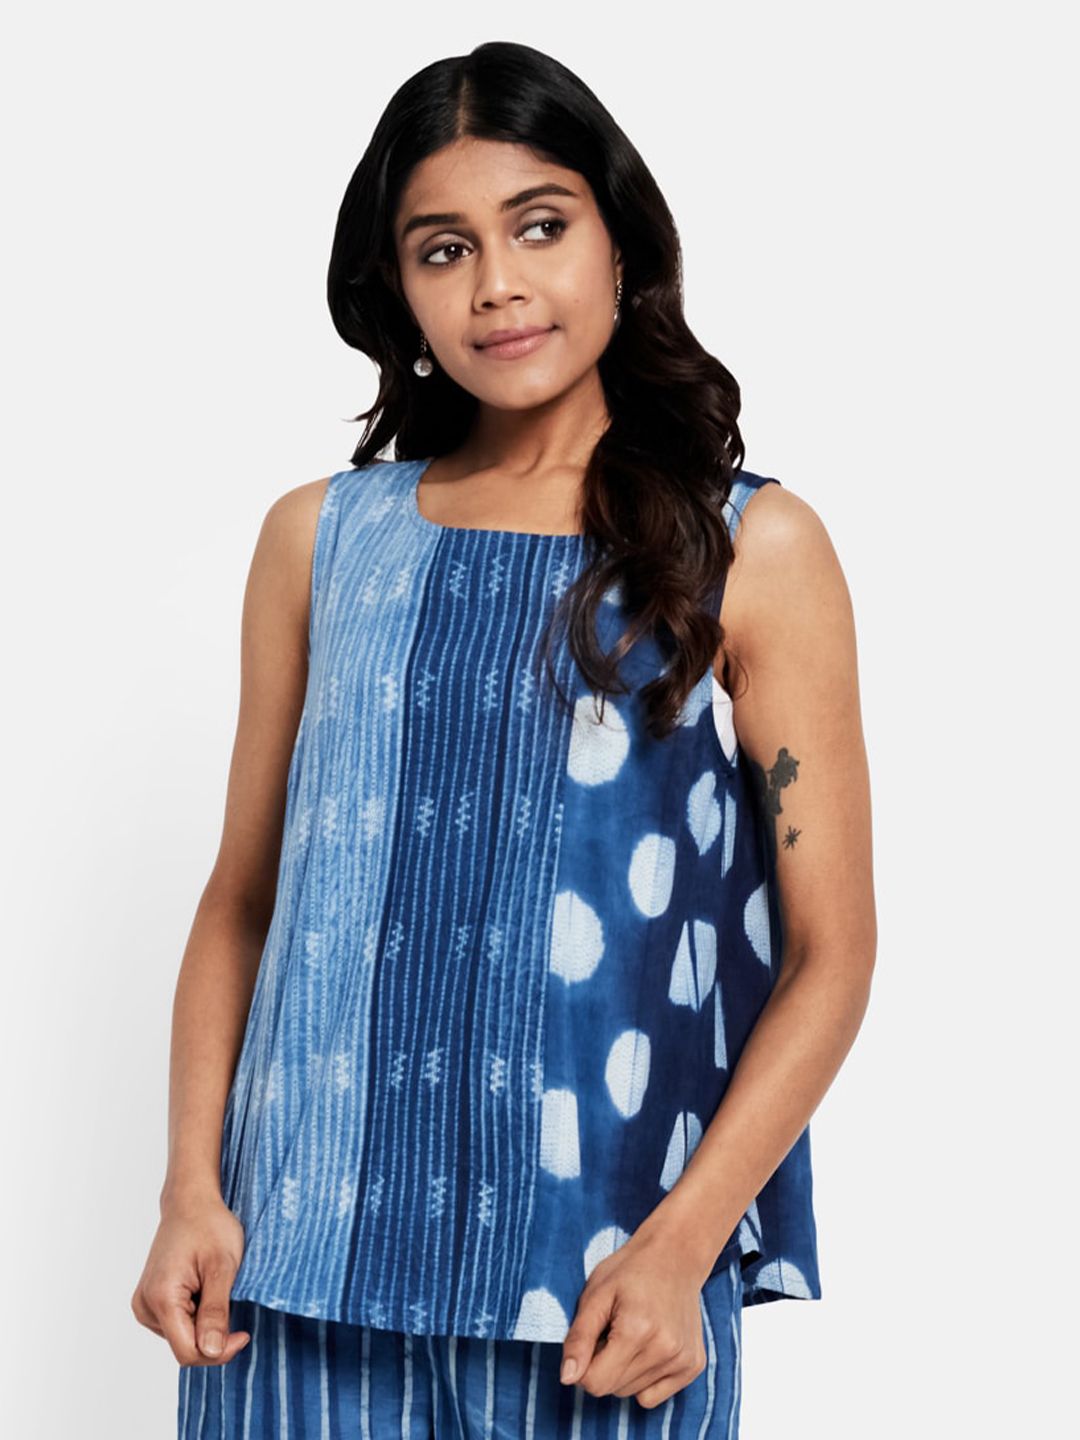 Fabindia Navy Blue Cotton Shibori Printed Top Price in India